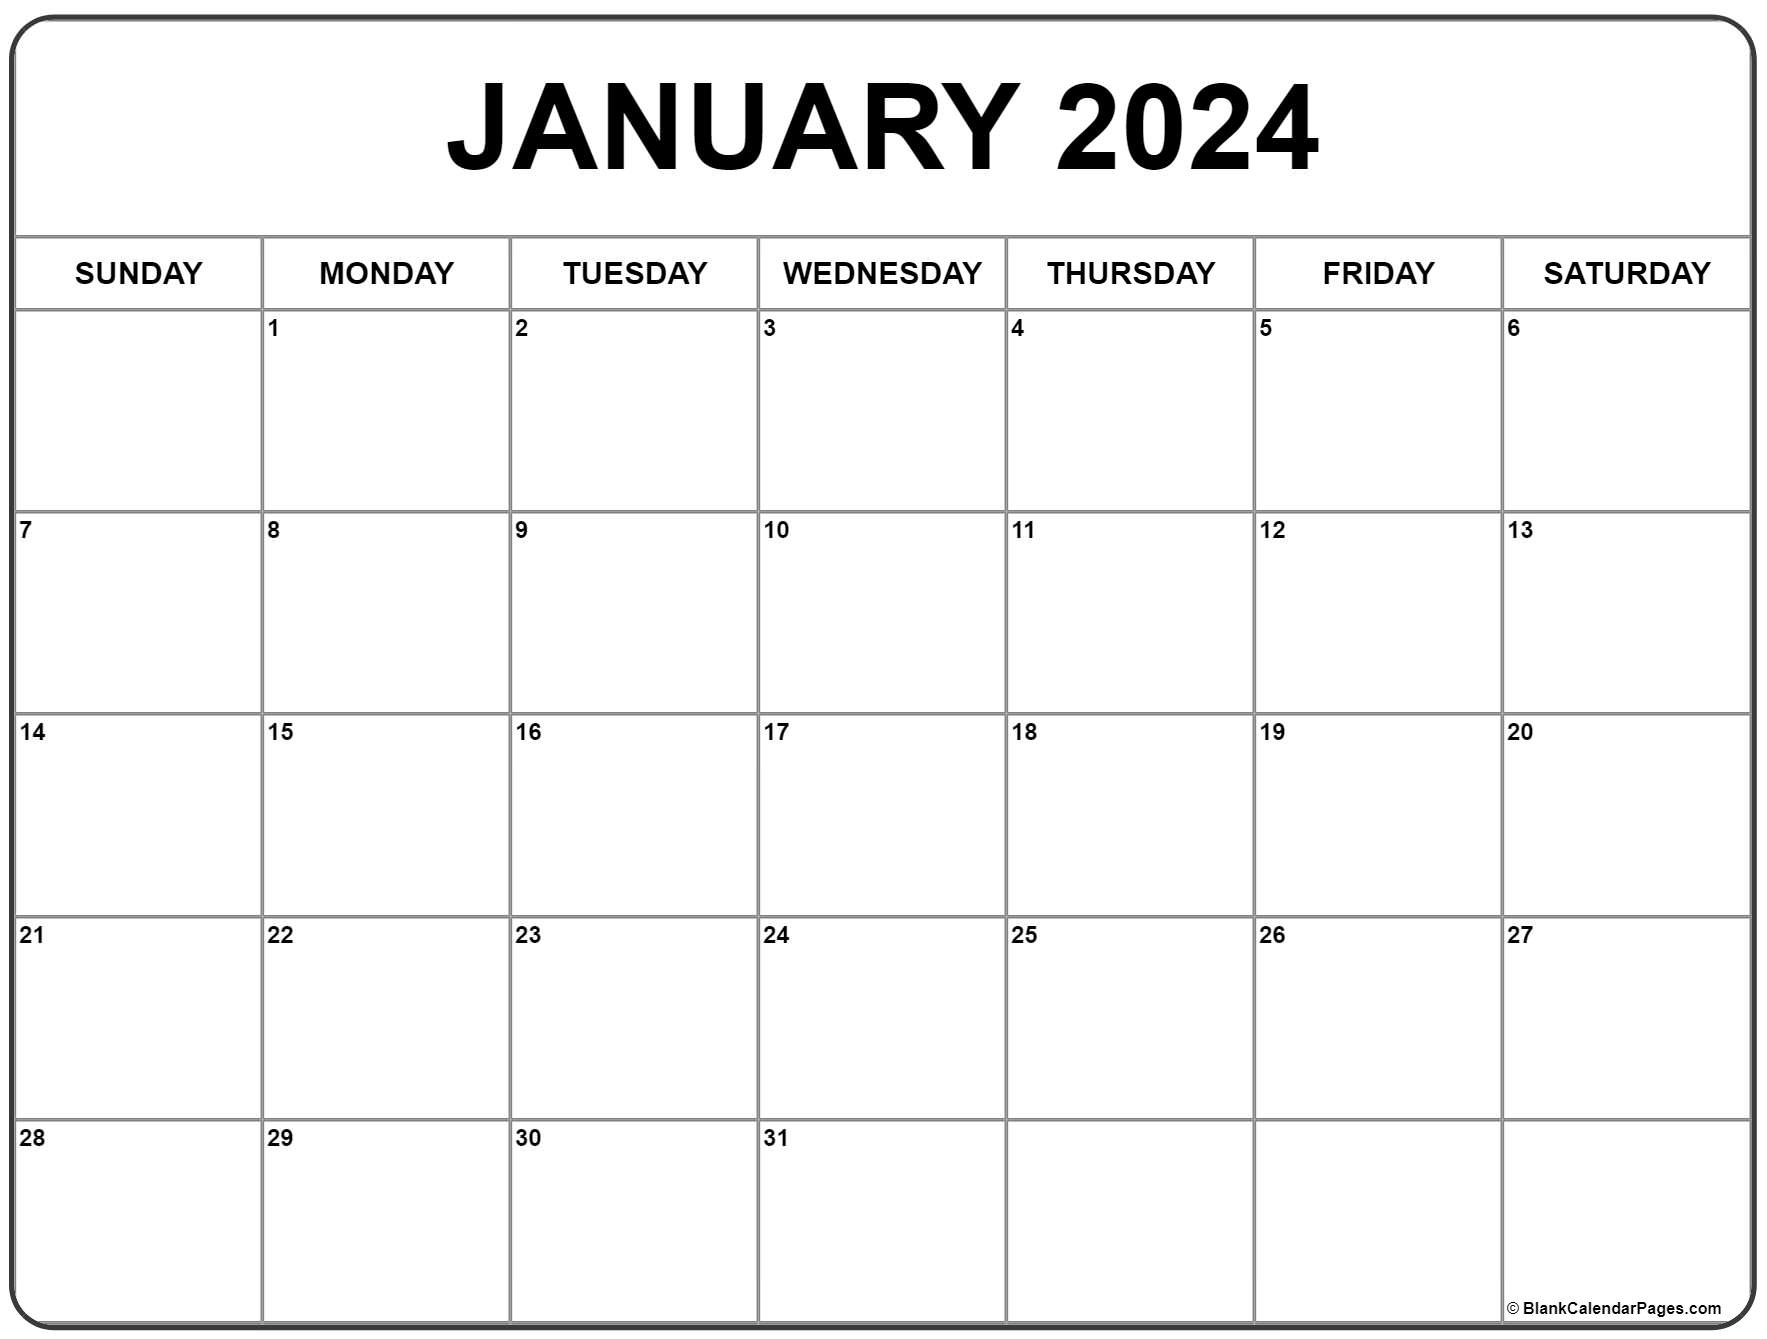 January 2024 Calendar | Free Printable Calendar for 2024 Printable Calendar By Month Free